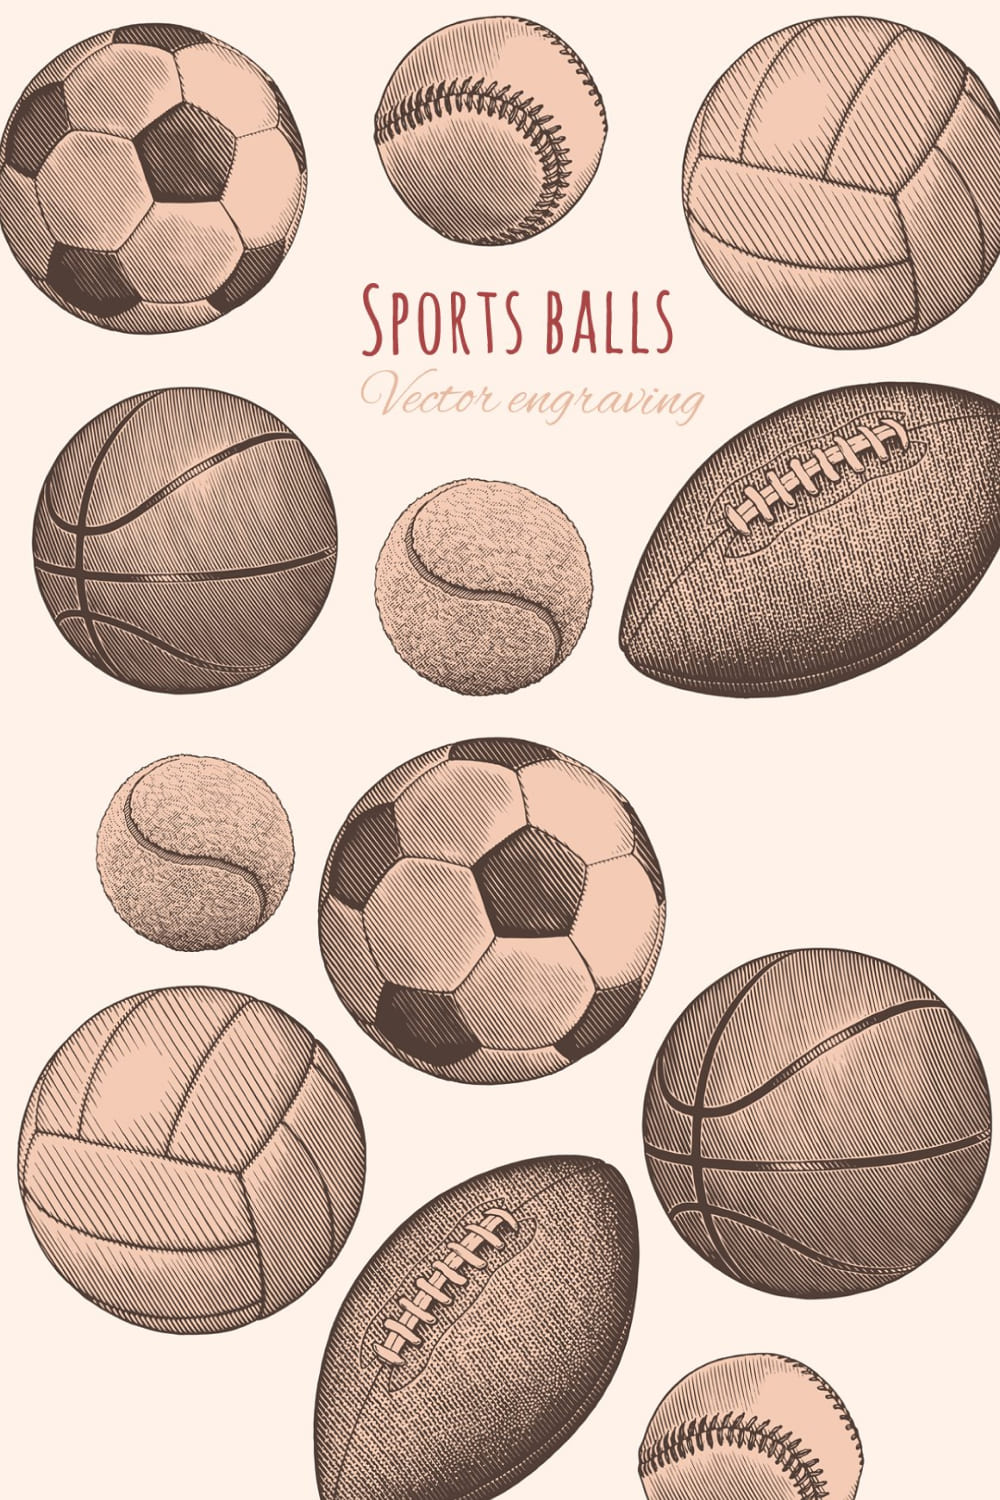 set sports balls 1000x1500 745